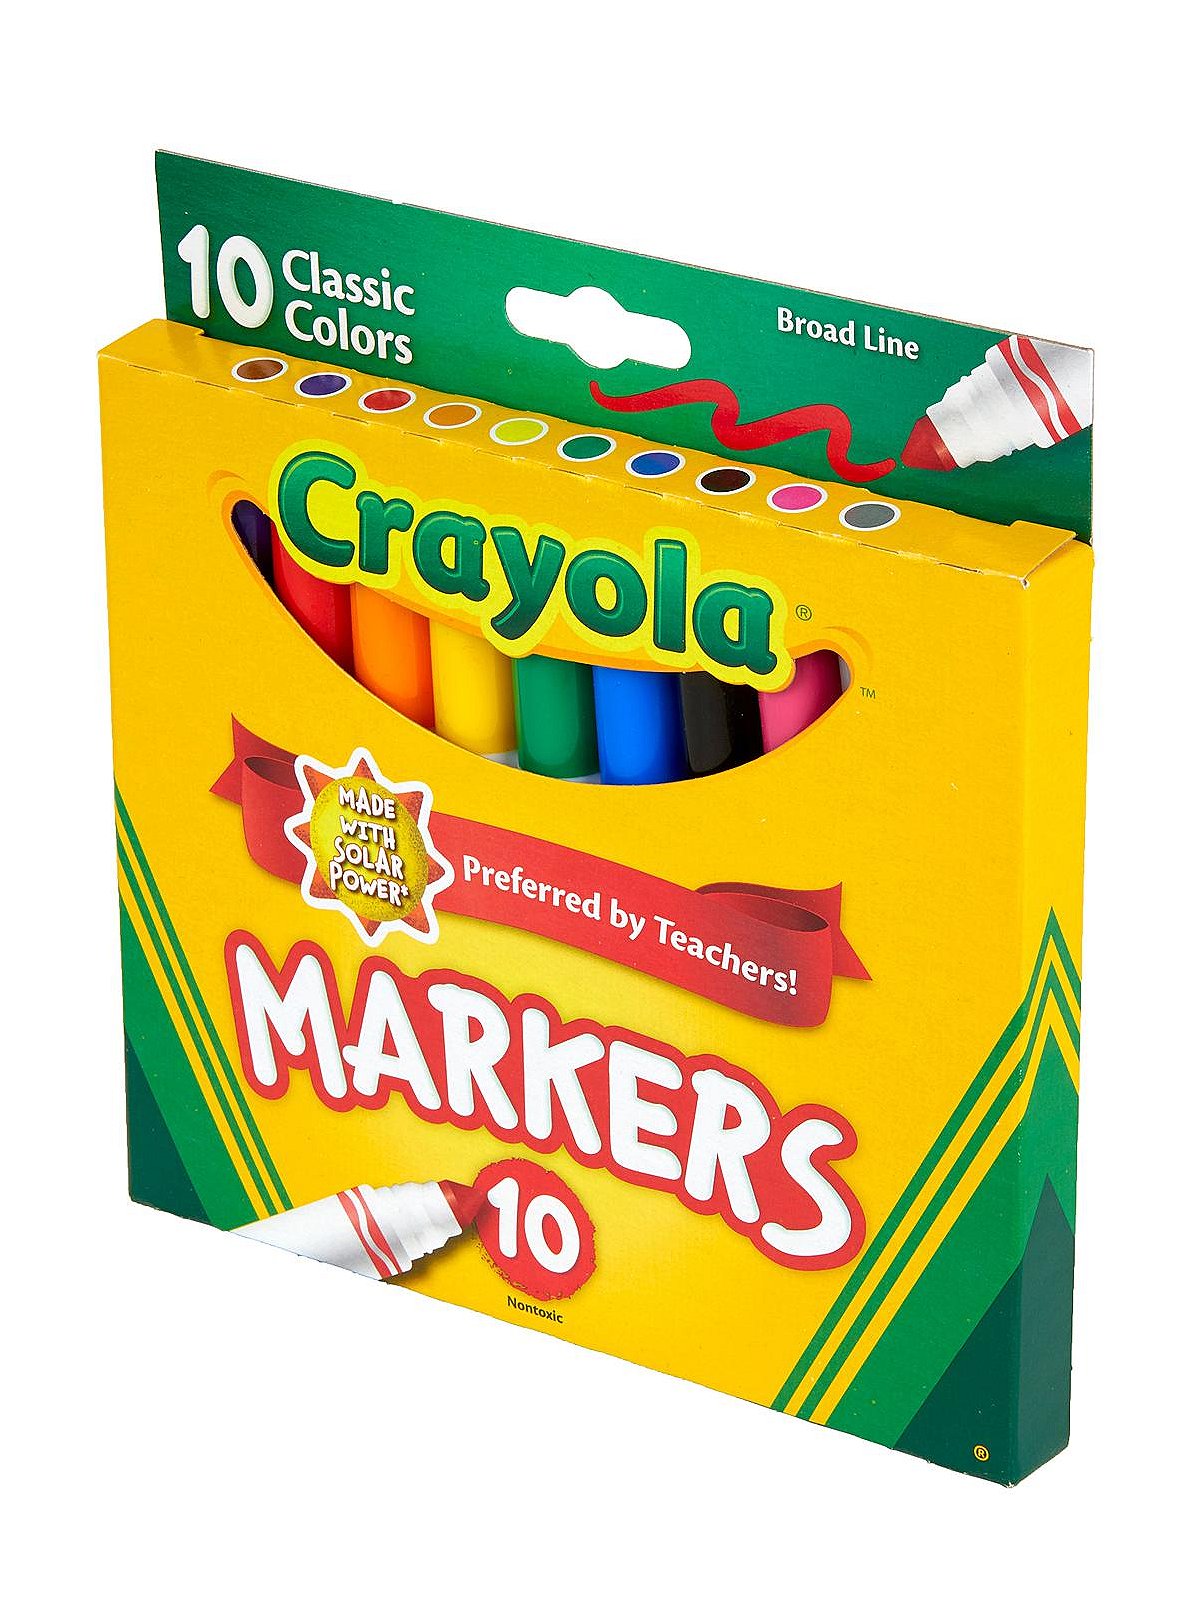 Classic Colors Marker Sets